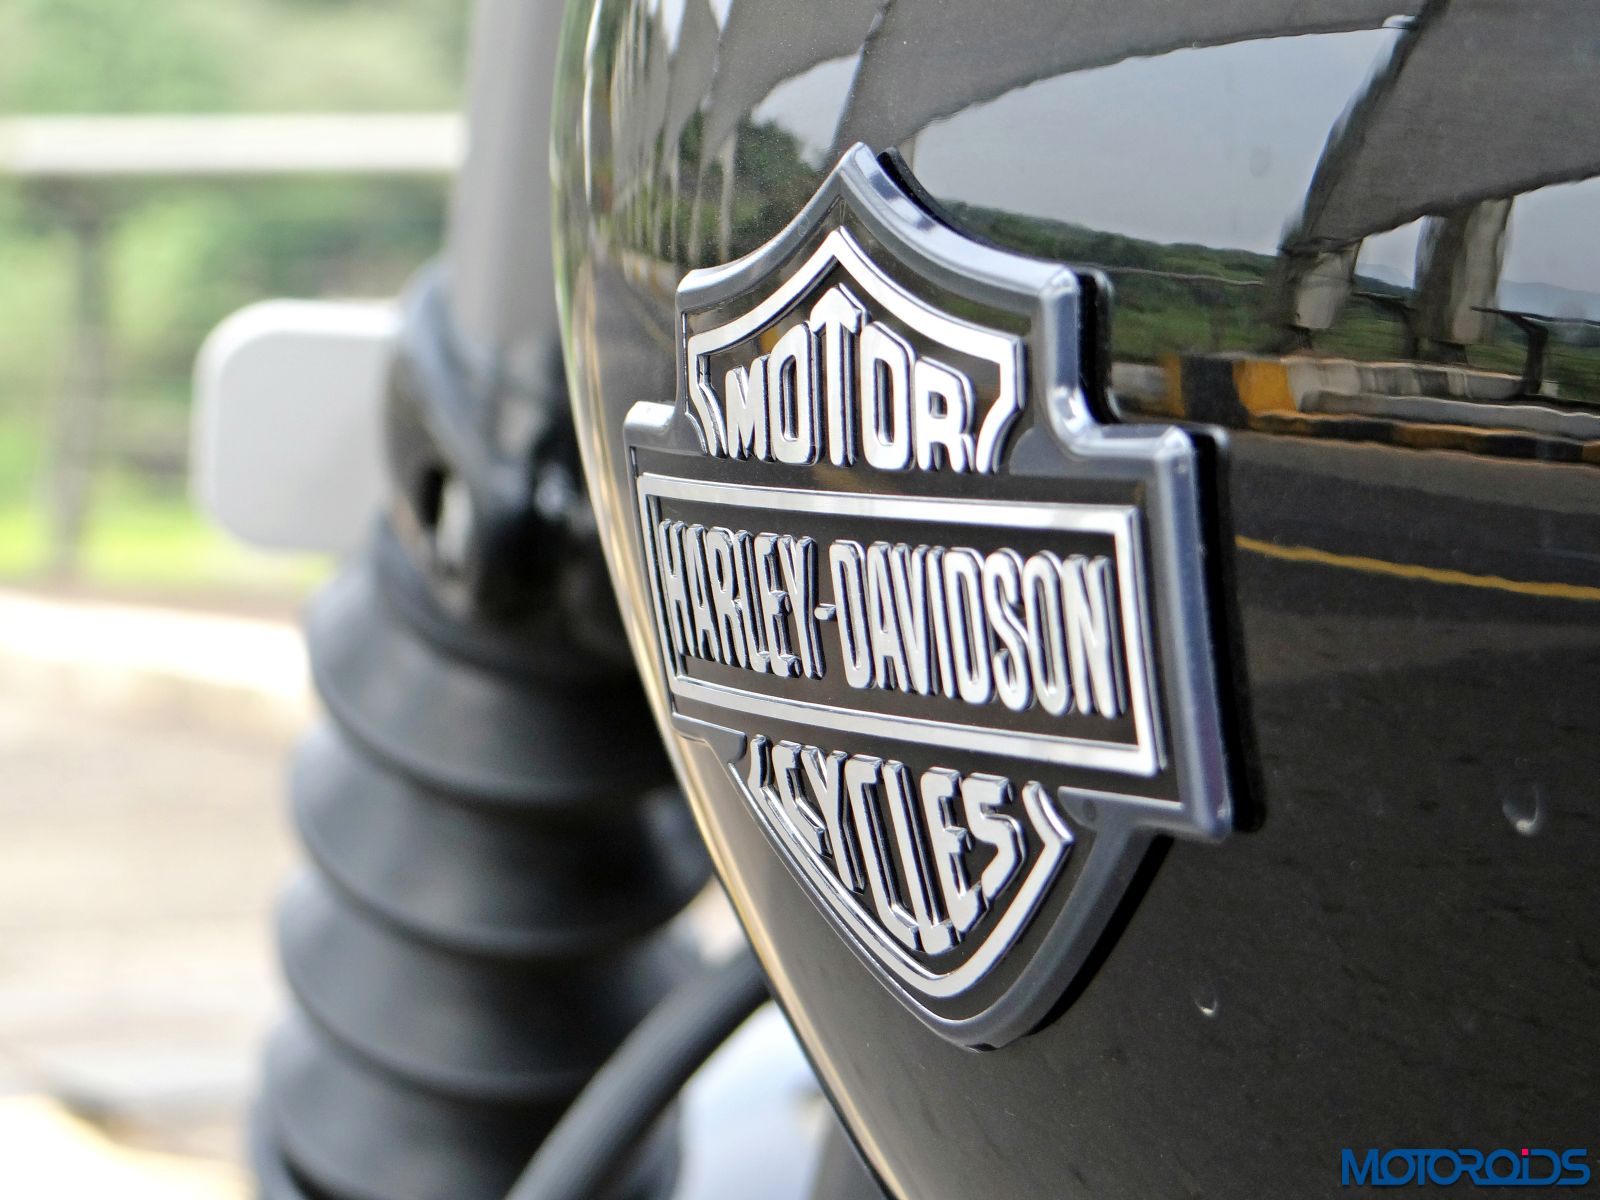 2016 Harley Davidson Street 750 Dark Custom Review (25)